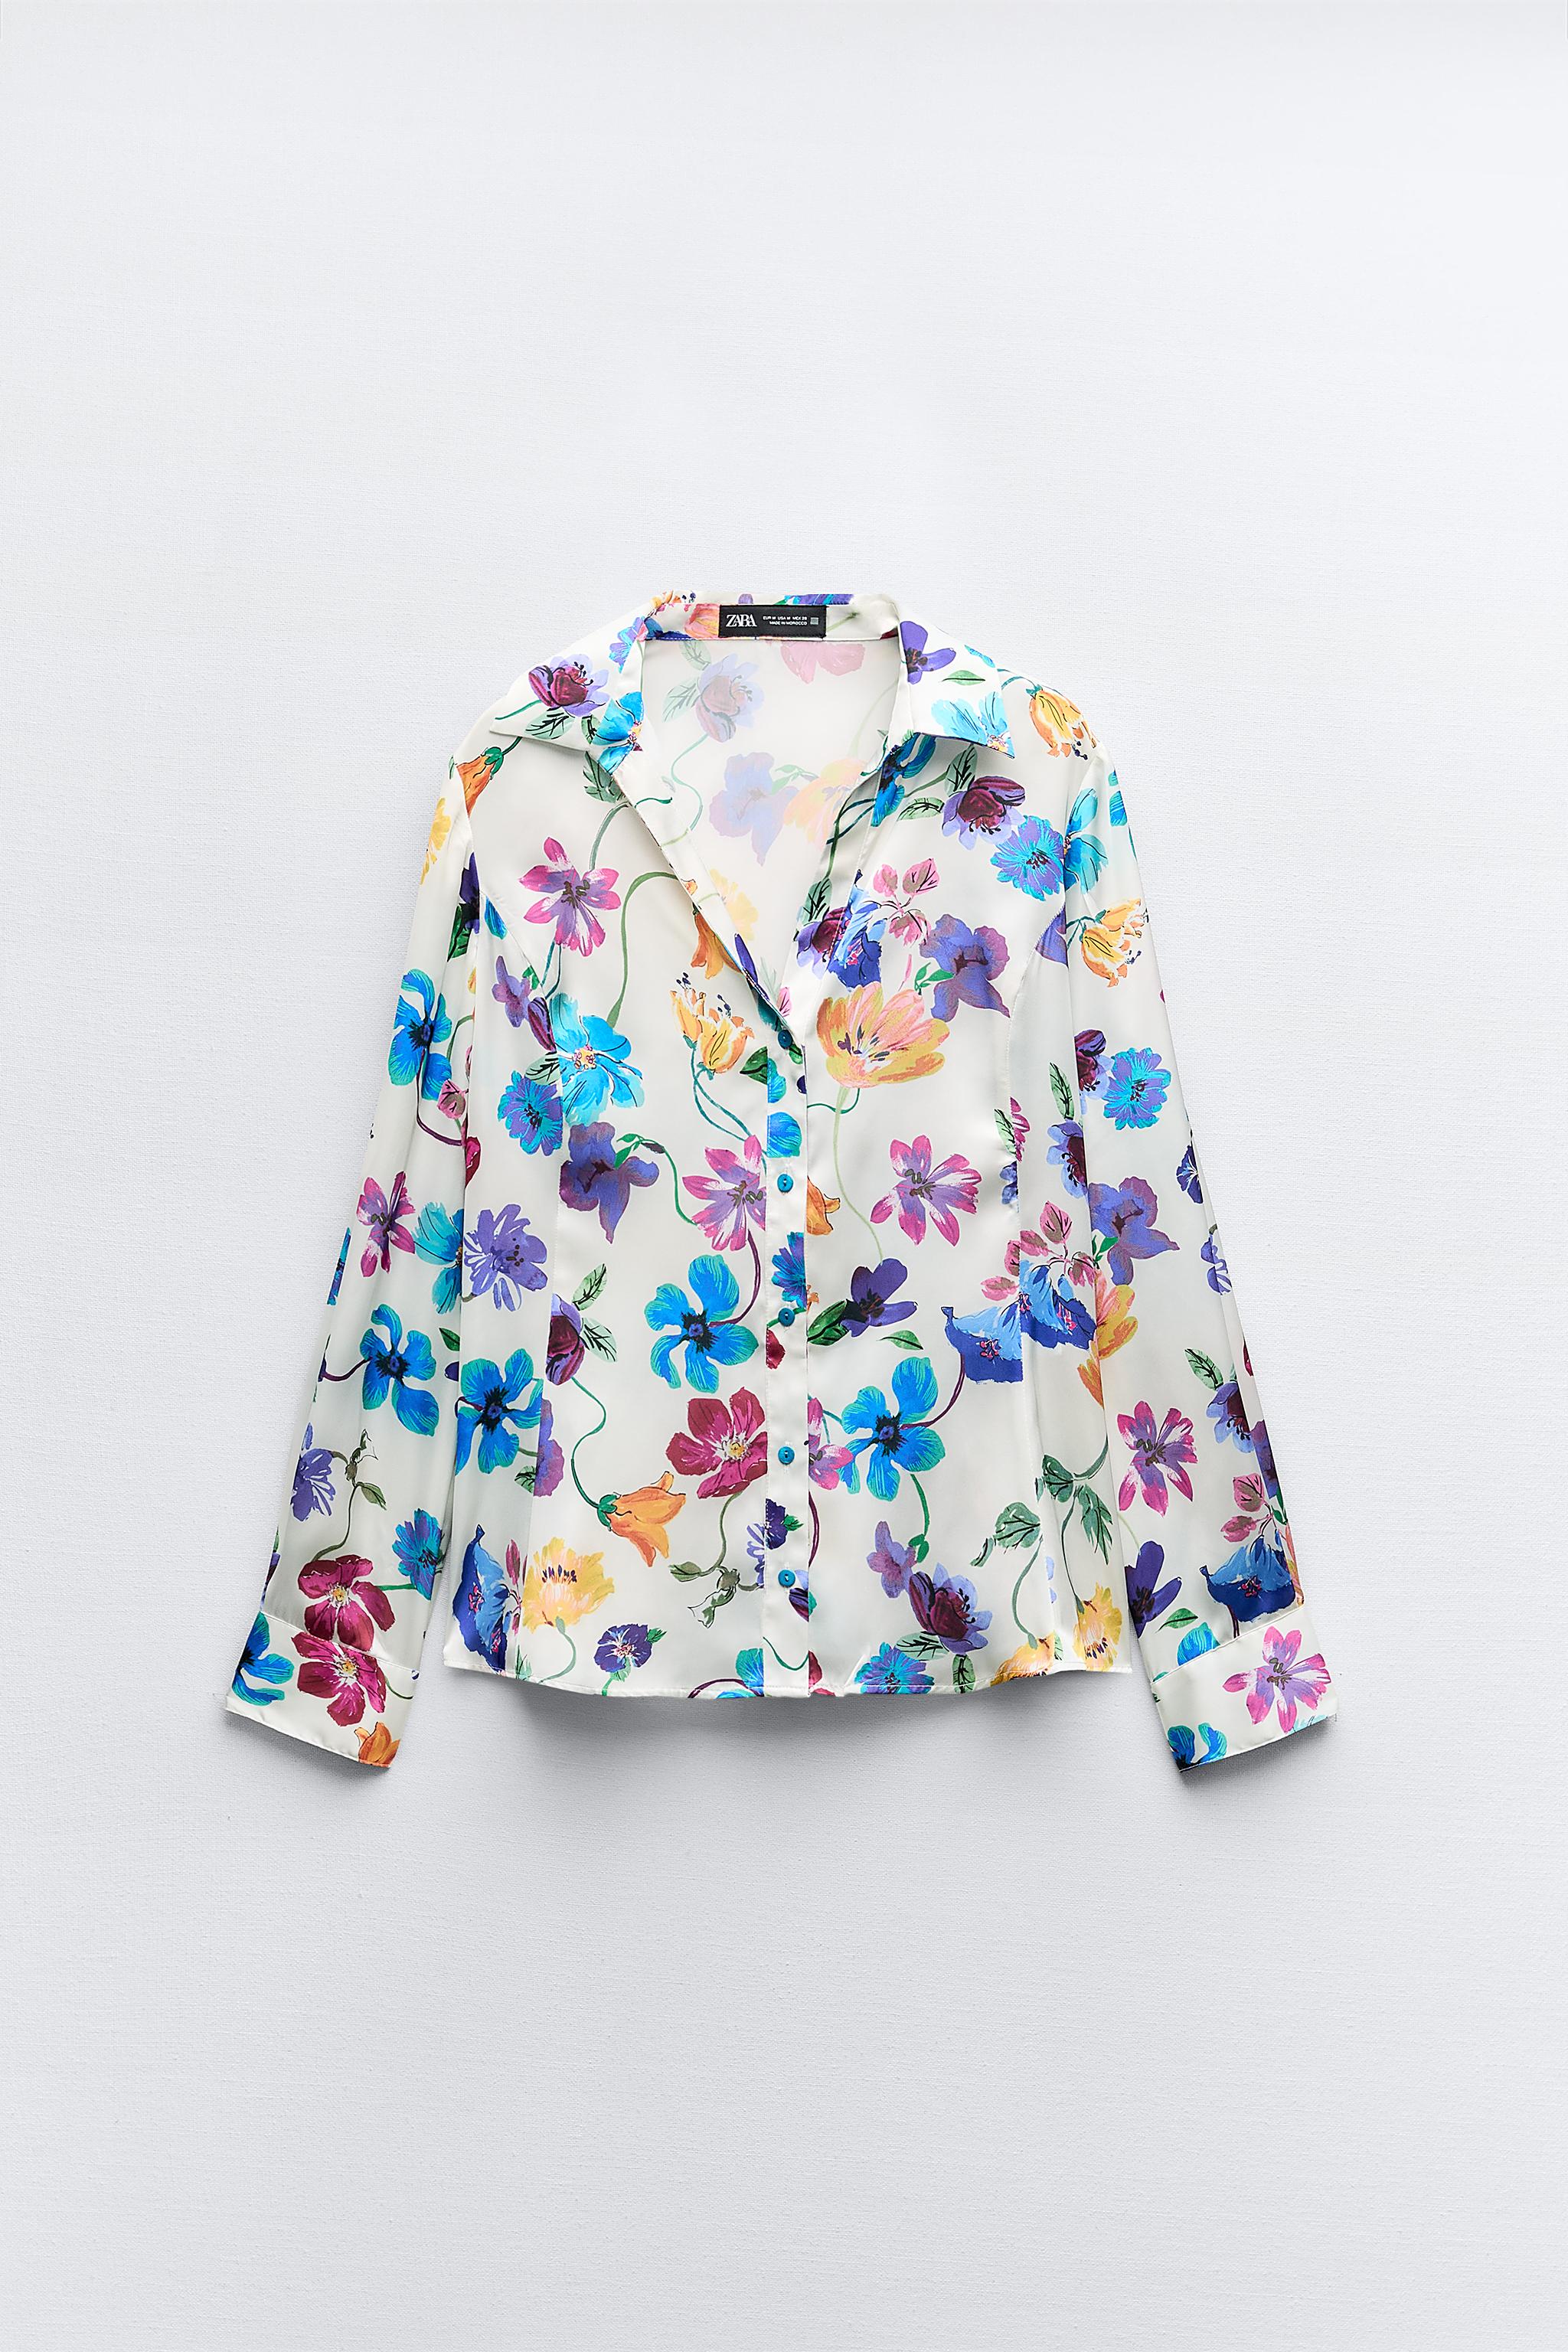 Zara Floral Printed Shirt With Kimono Sleeves With Hat and Matching Pants  Three Set, Printed Three Piece, Boho Summer Look, Summer Pants Set -   Finland